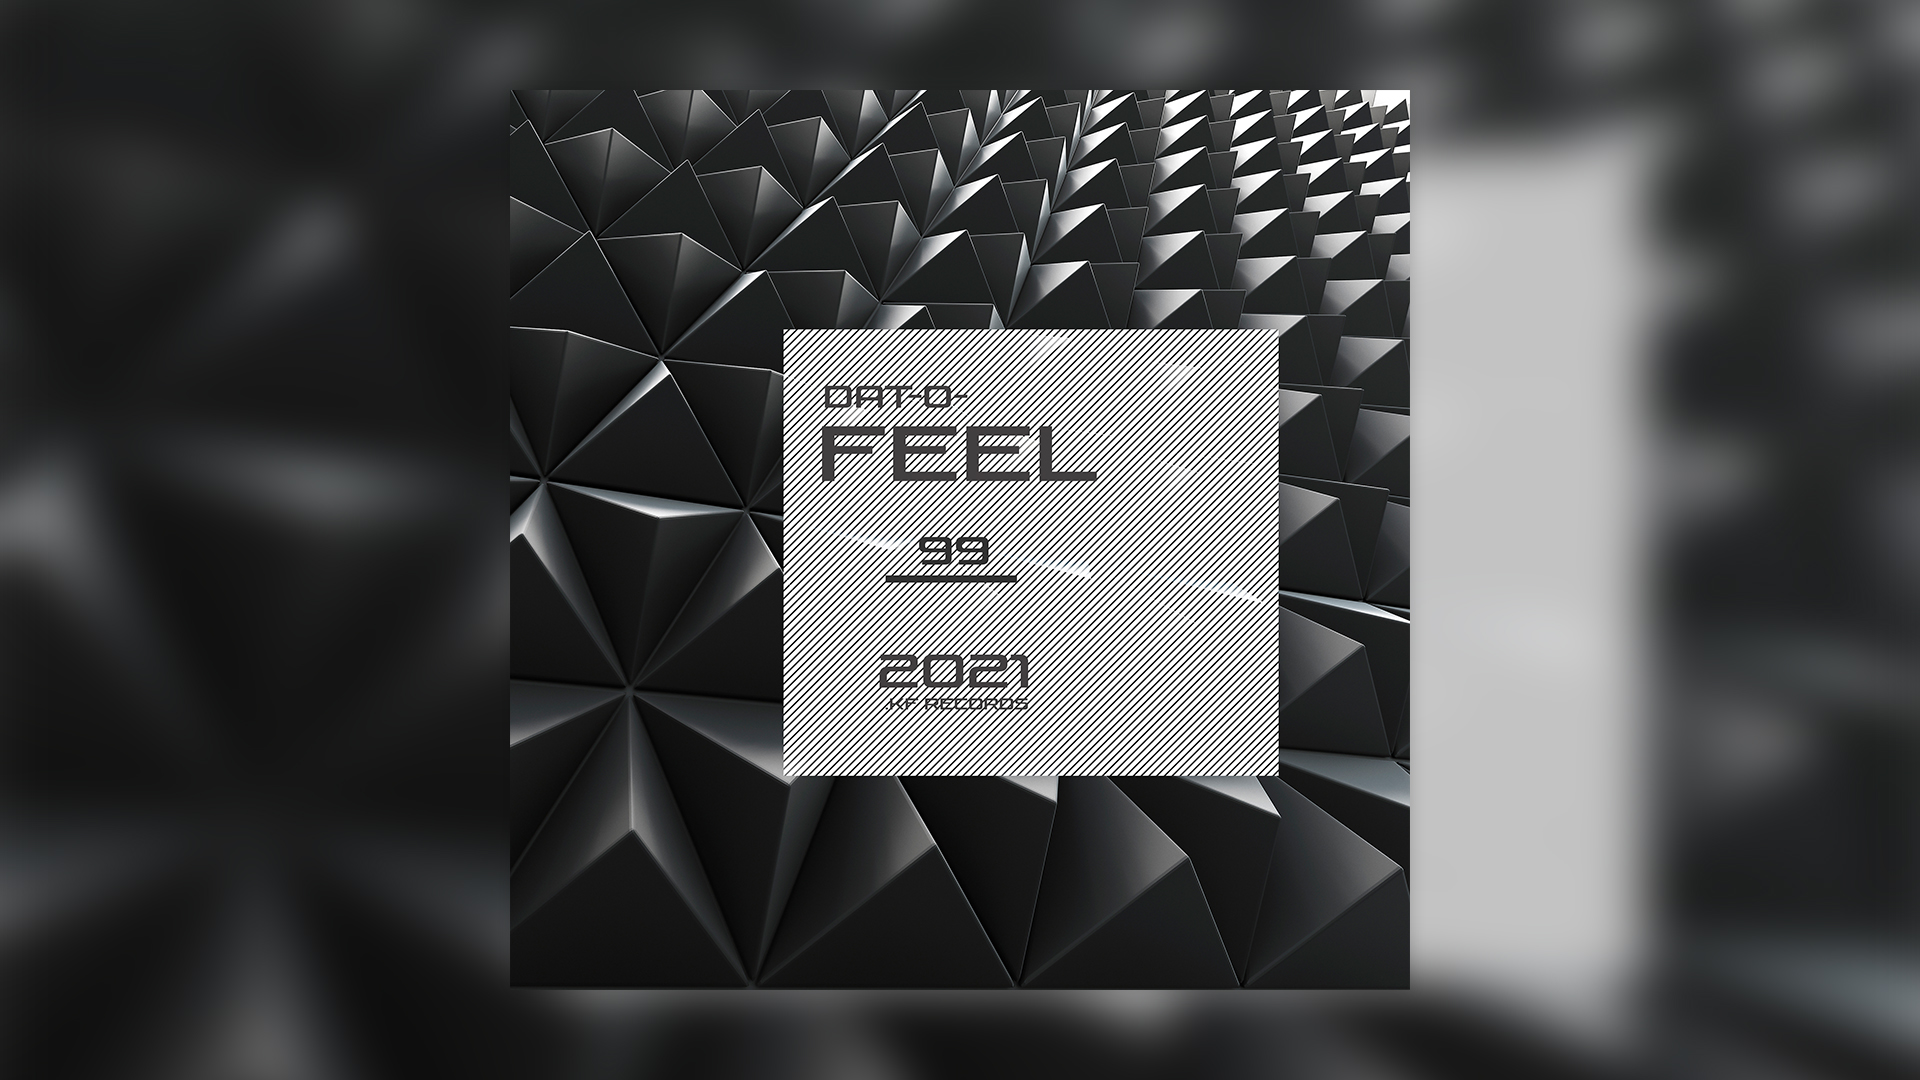 Микс Sound 1. Redfeel - feelings (Original Mix) 29 08. INVRS feeling Original Mix. Feel me original mix